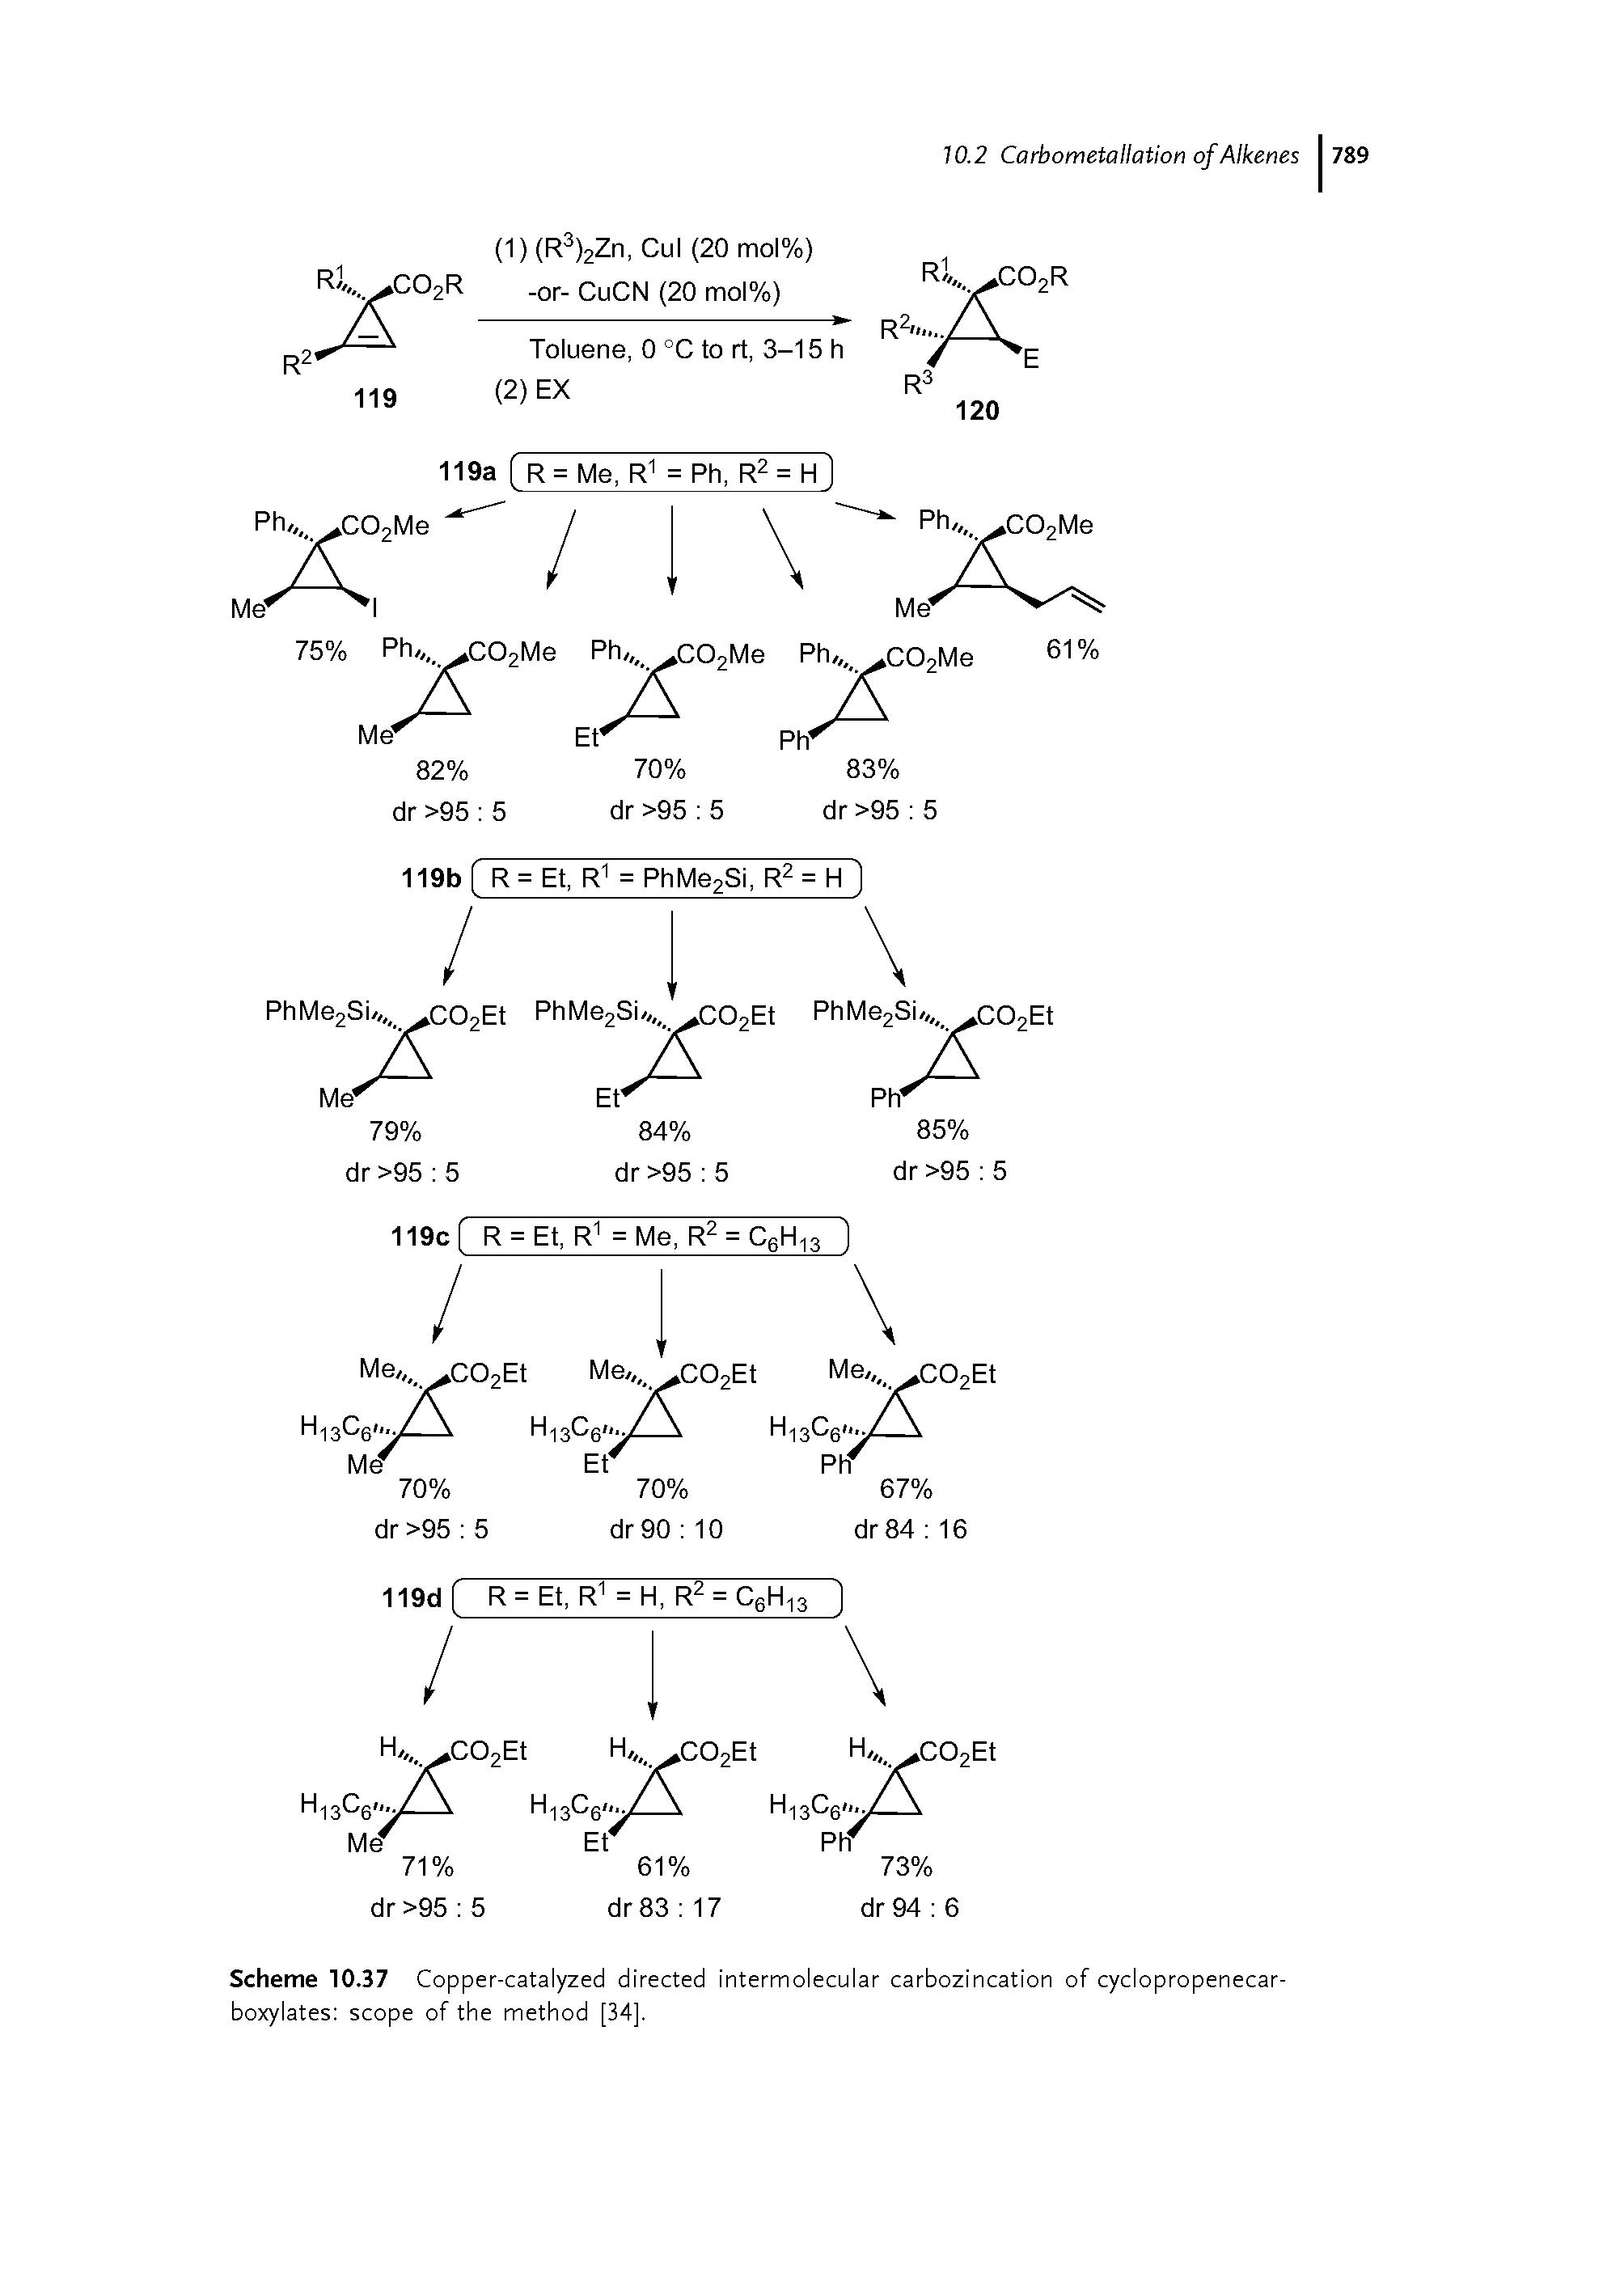 Scheme 10.37 Copper-catalyzed directed intermolecular carbozincation of cyclopropenecar-boxylates scope of the method [34].